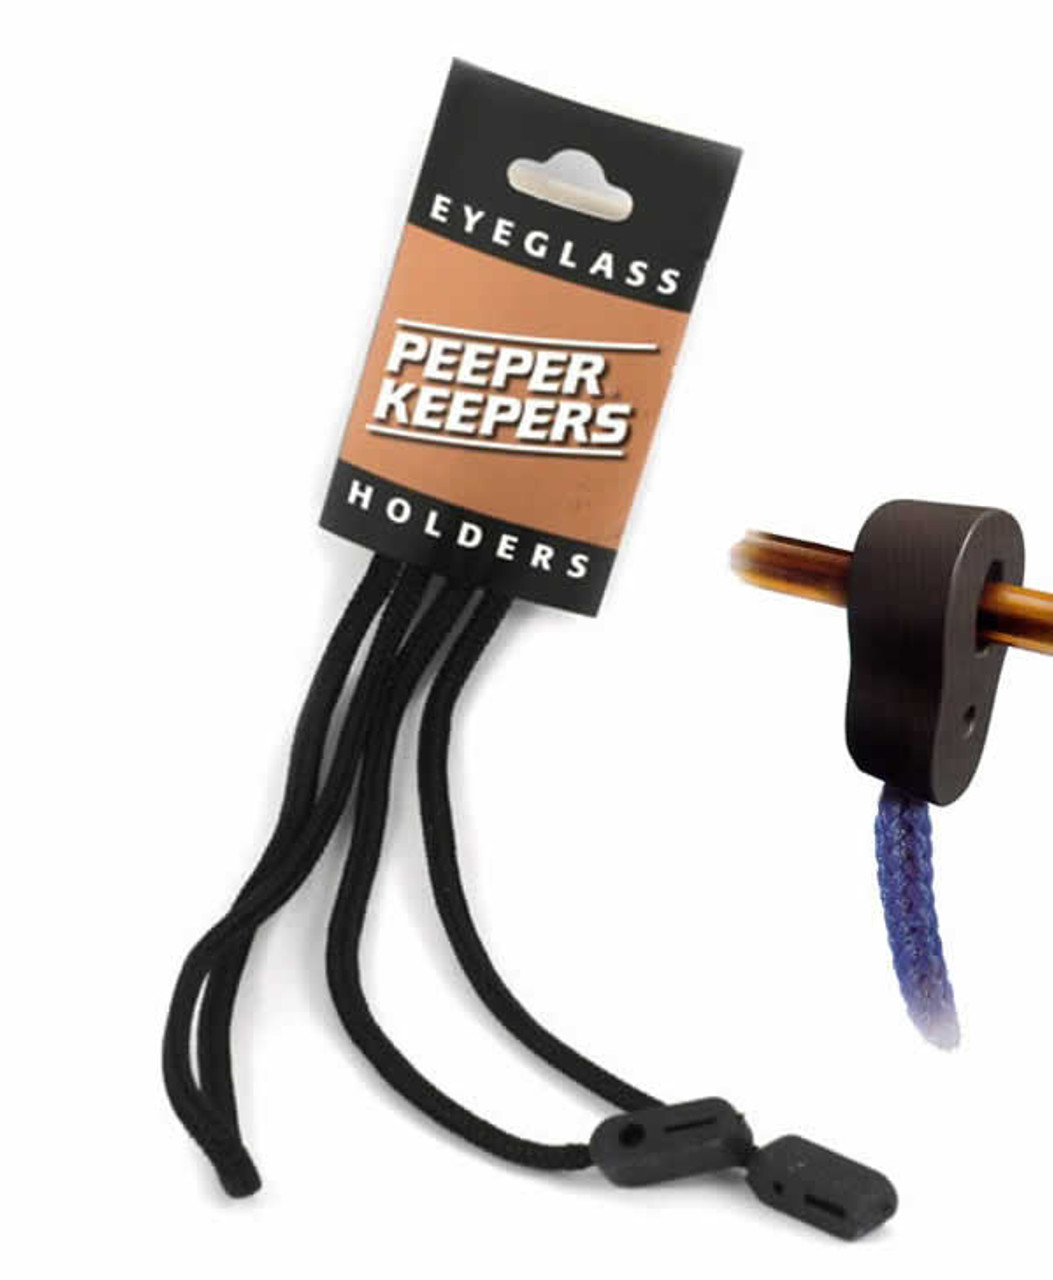 Peeper Keepers - Anodized aluminum eyeglass holders - CHARITABLE ART